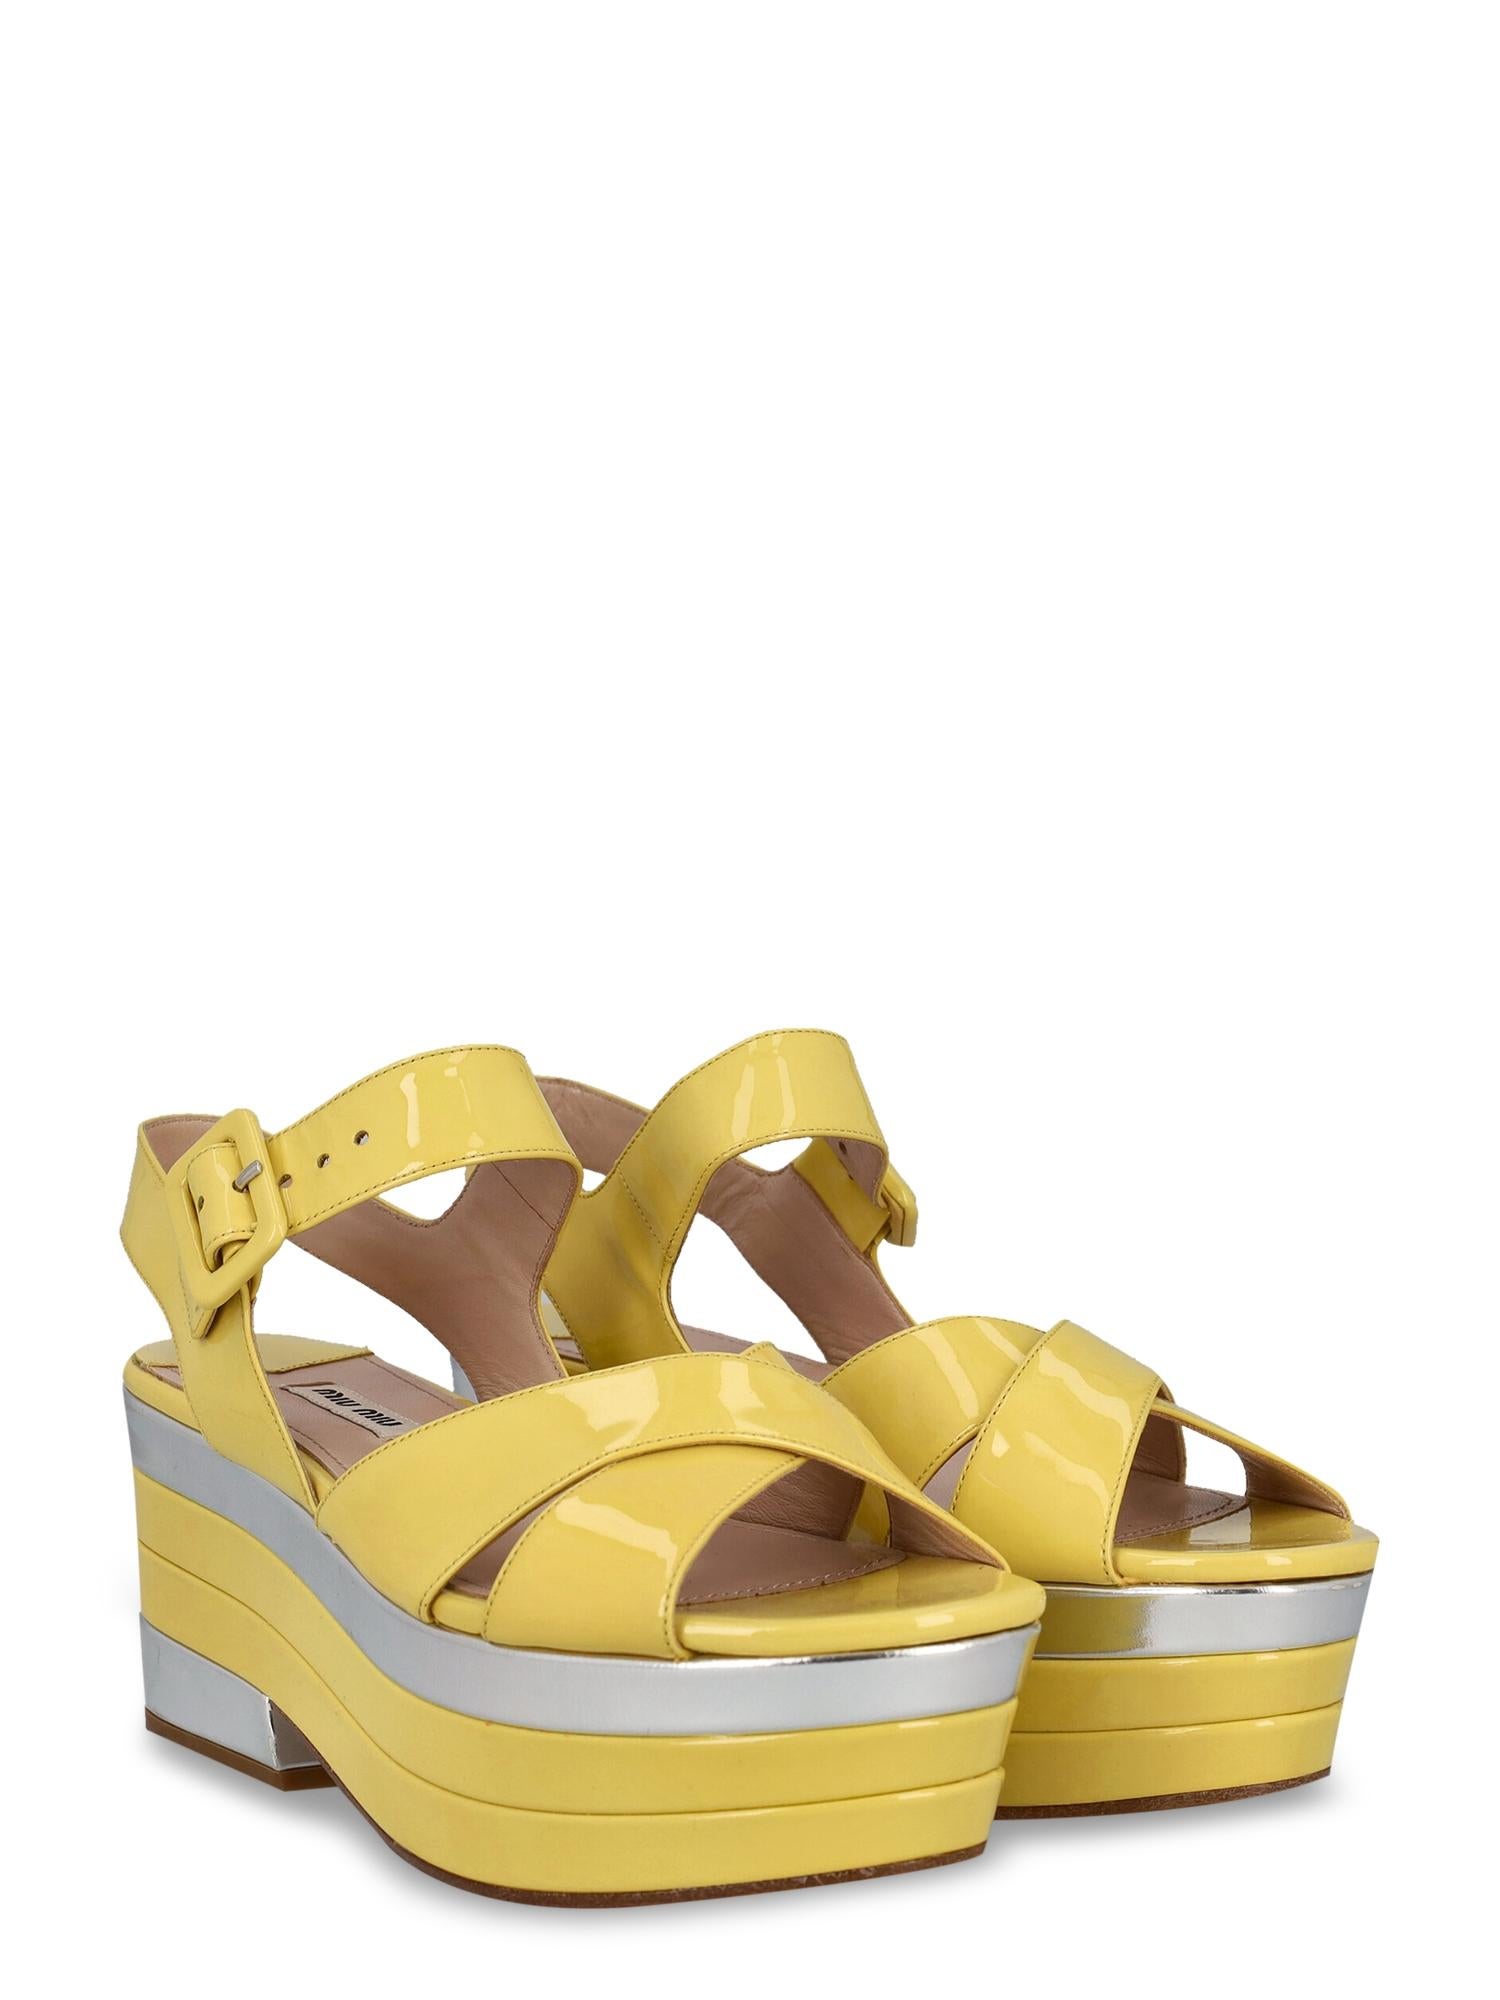 coach yellow sandals